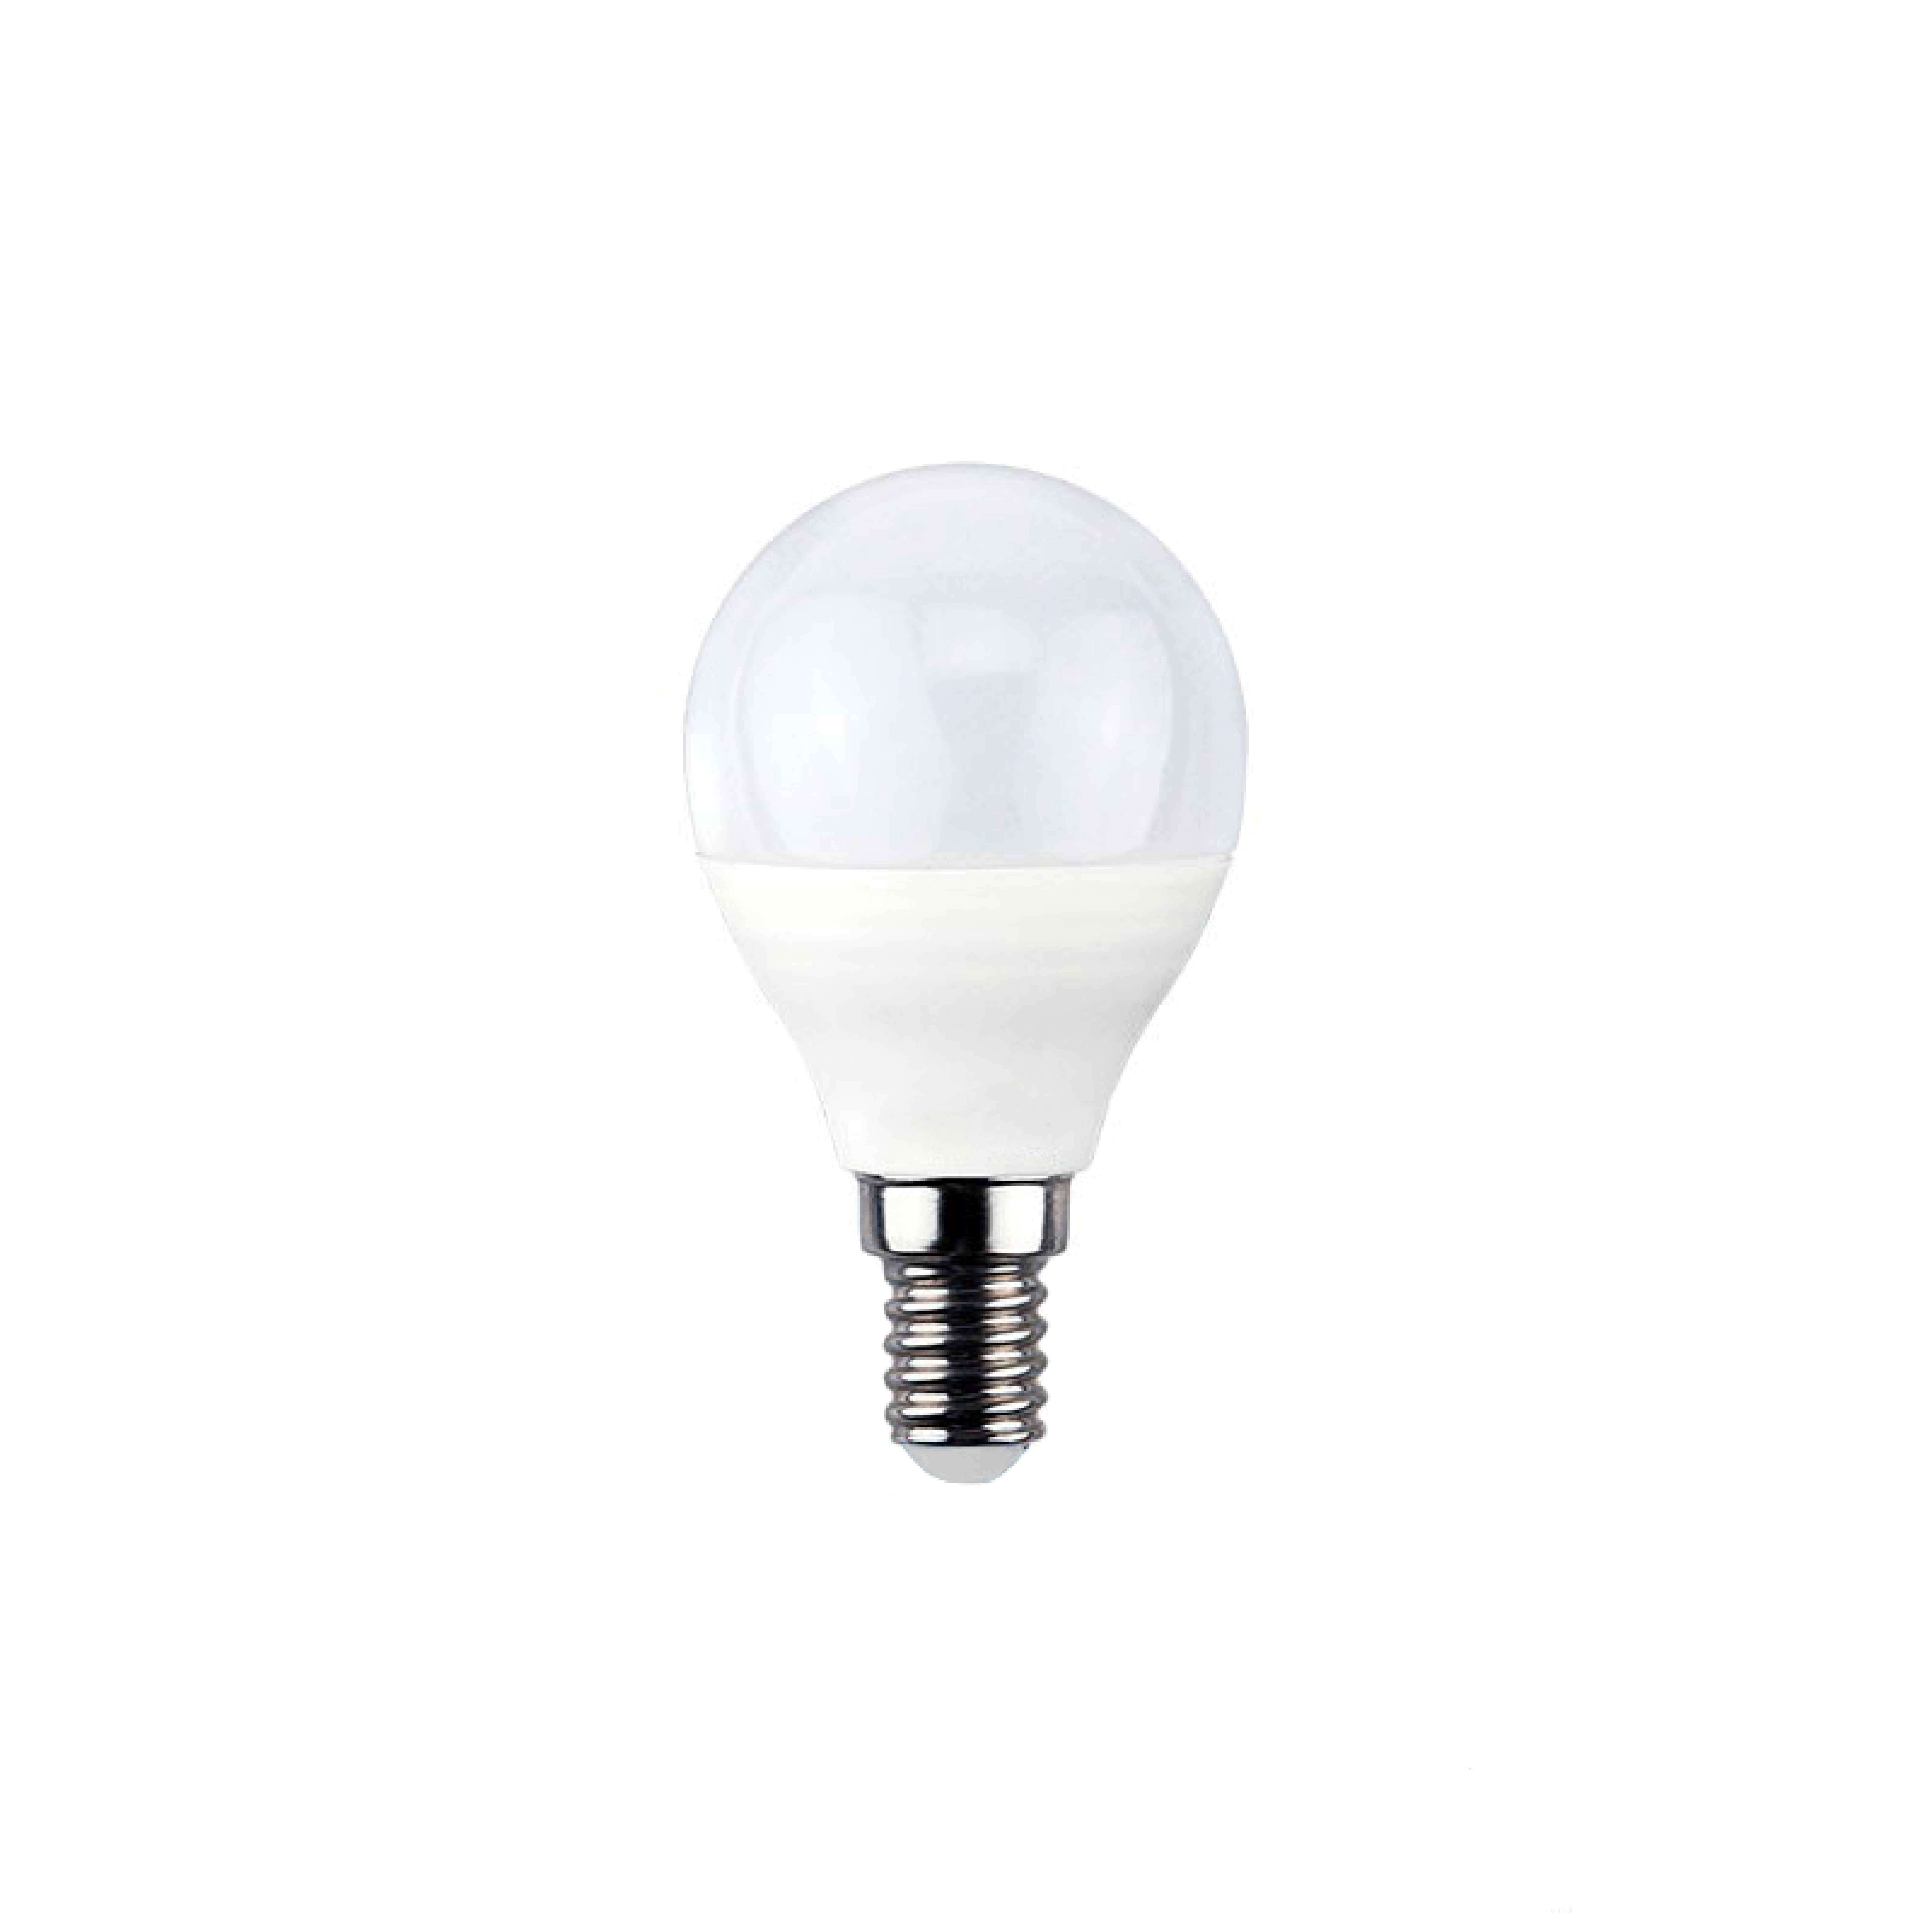 Acme LED Globe 6W, 3000K warm white, E14 EOL